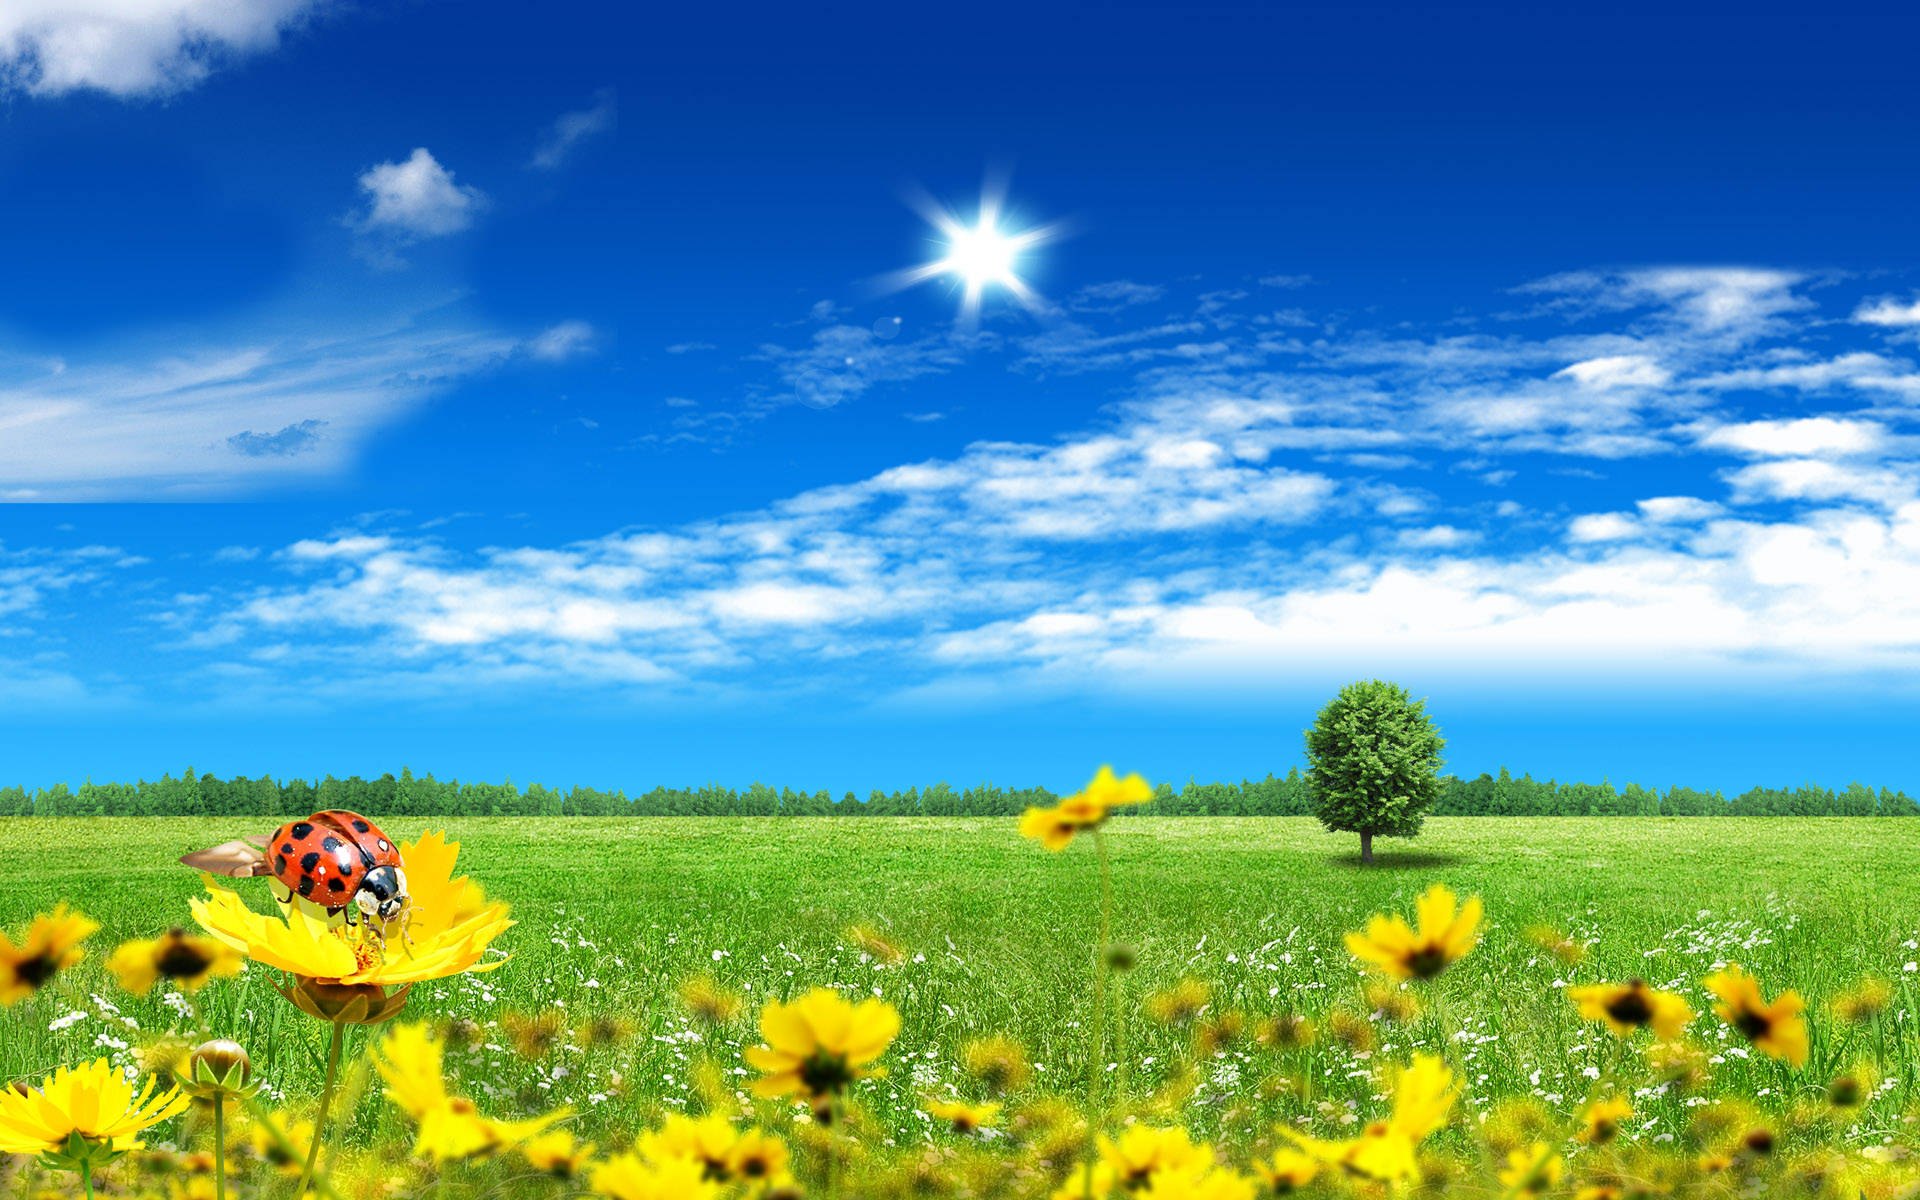  mi9comfree summer fantasy landscape for desktop wallpaper 80967html 1920x1200